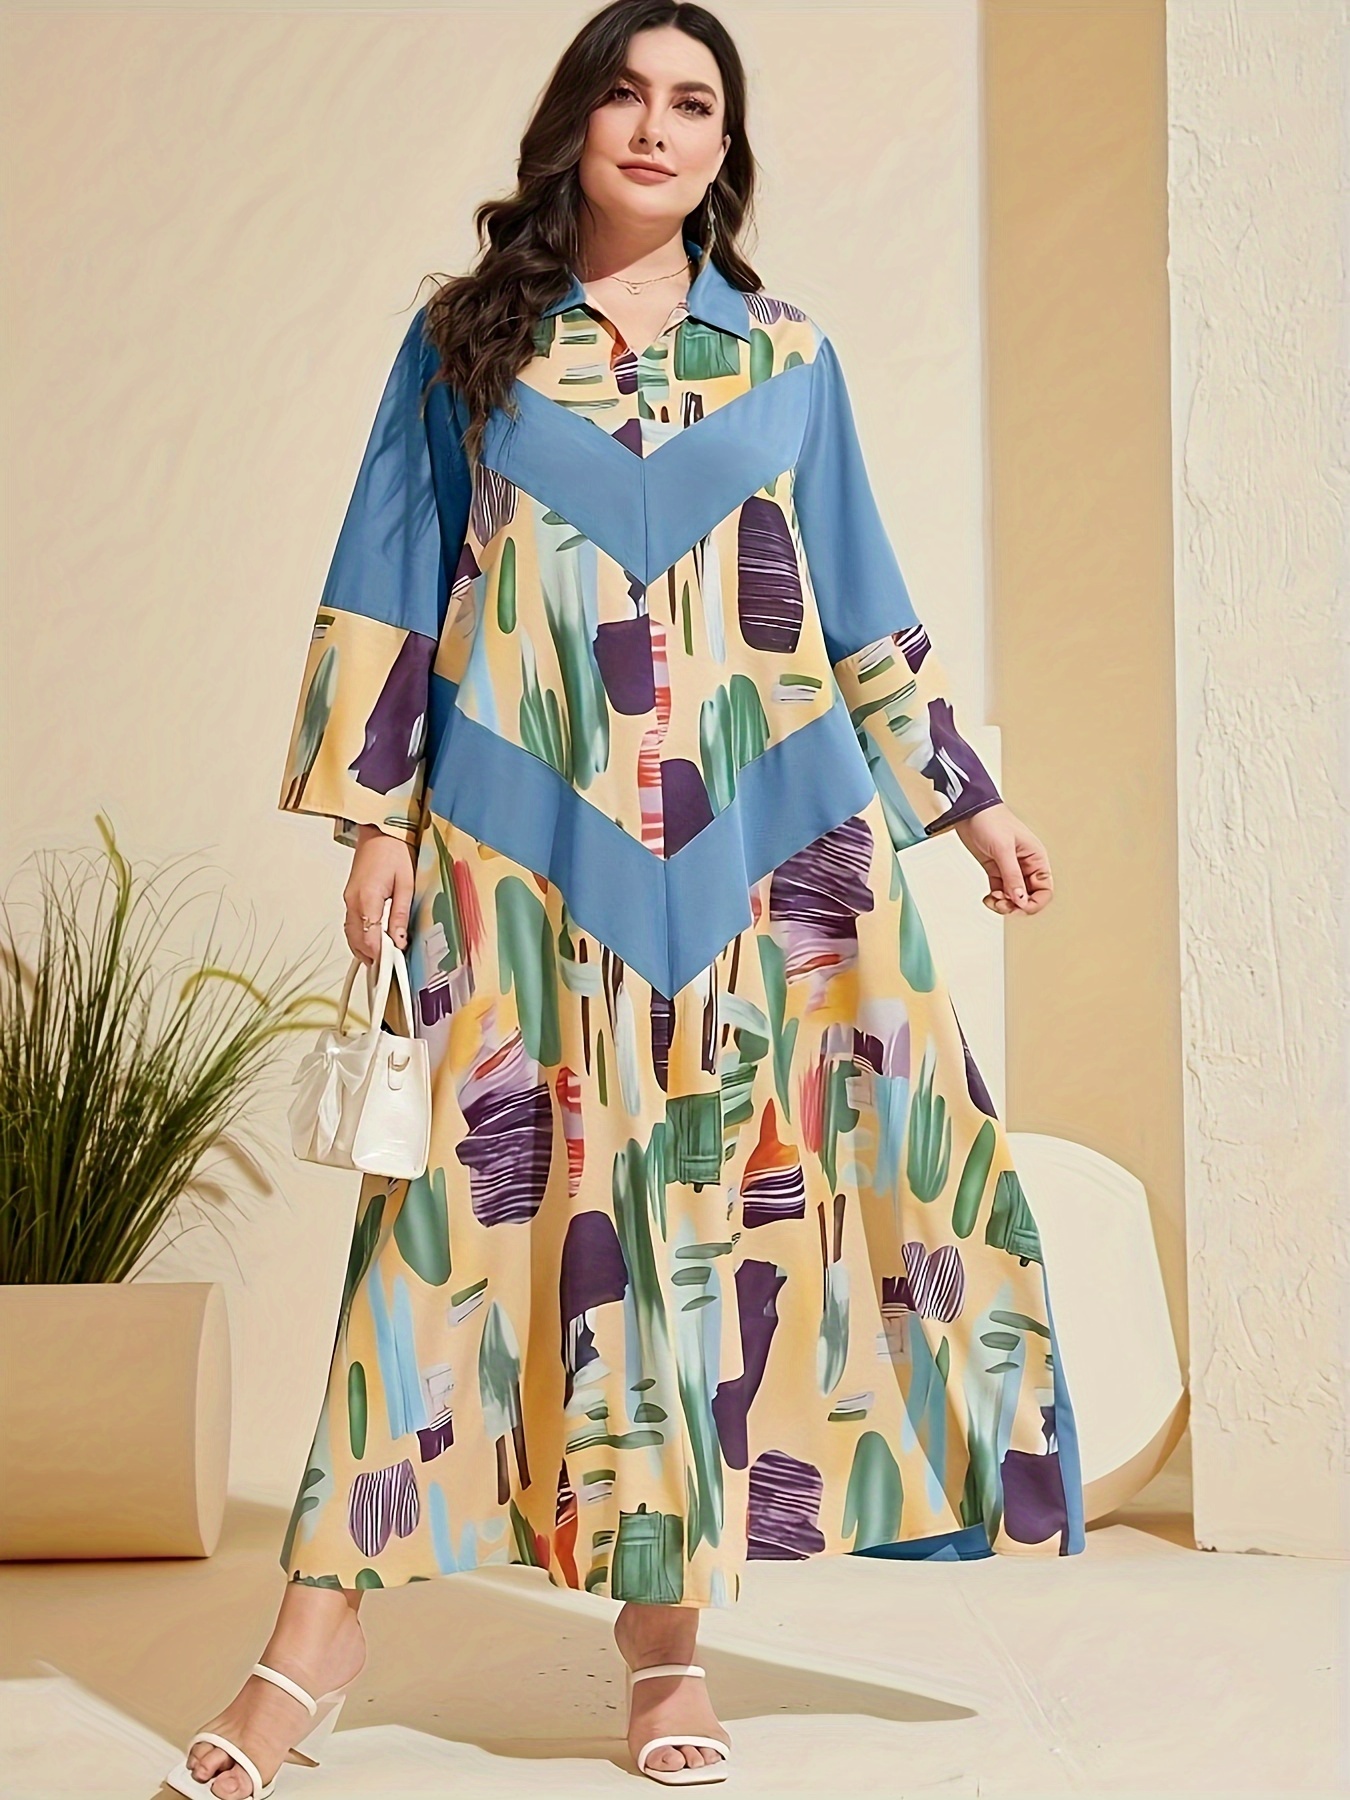 Women's Muslim Modest Dress Dots Print Full Sleeve Belted Long Dress Ruffle  Tiered Ankle Length Islamic Dress